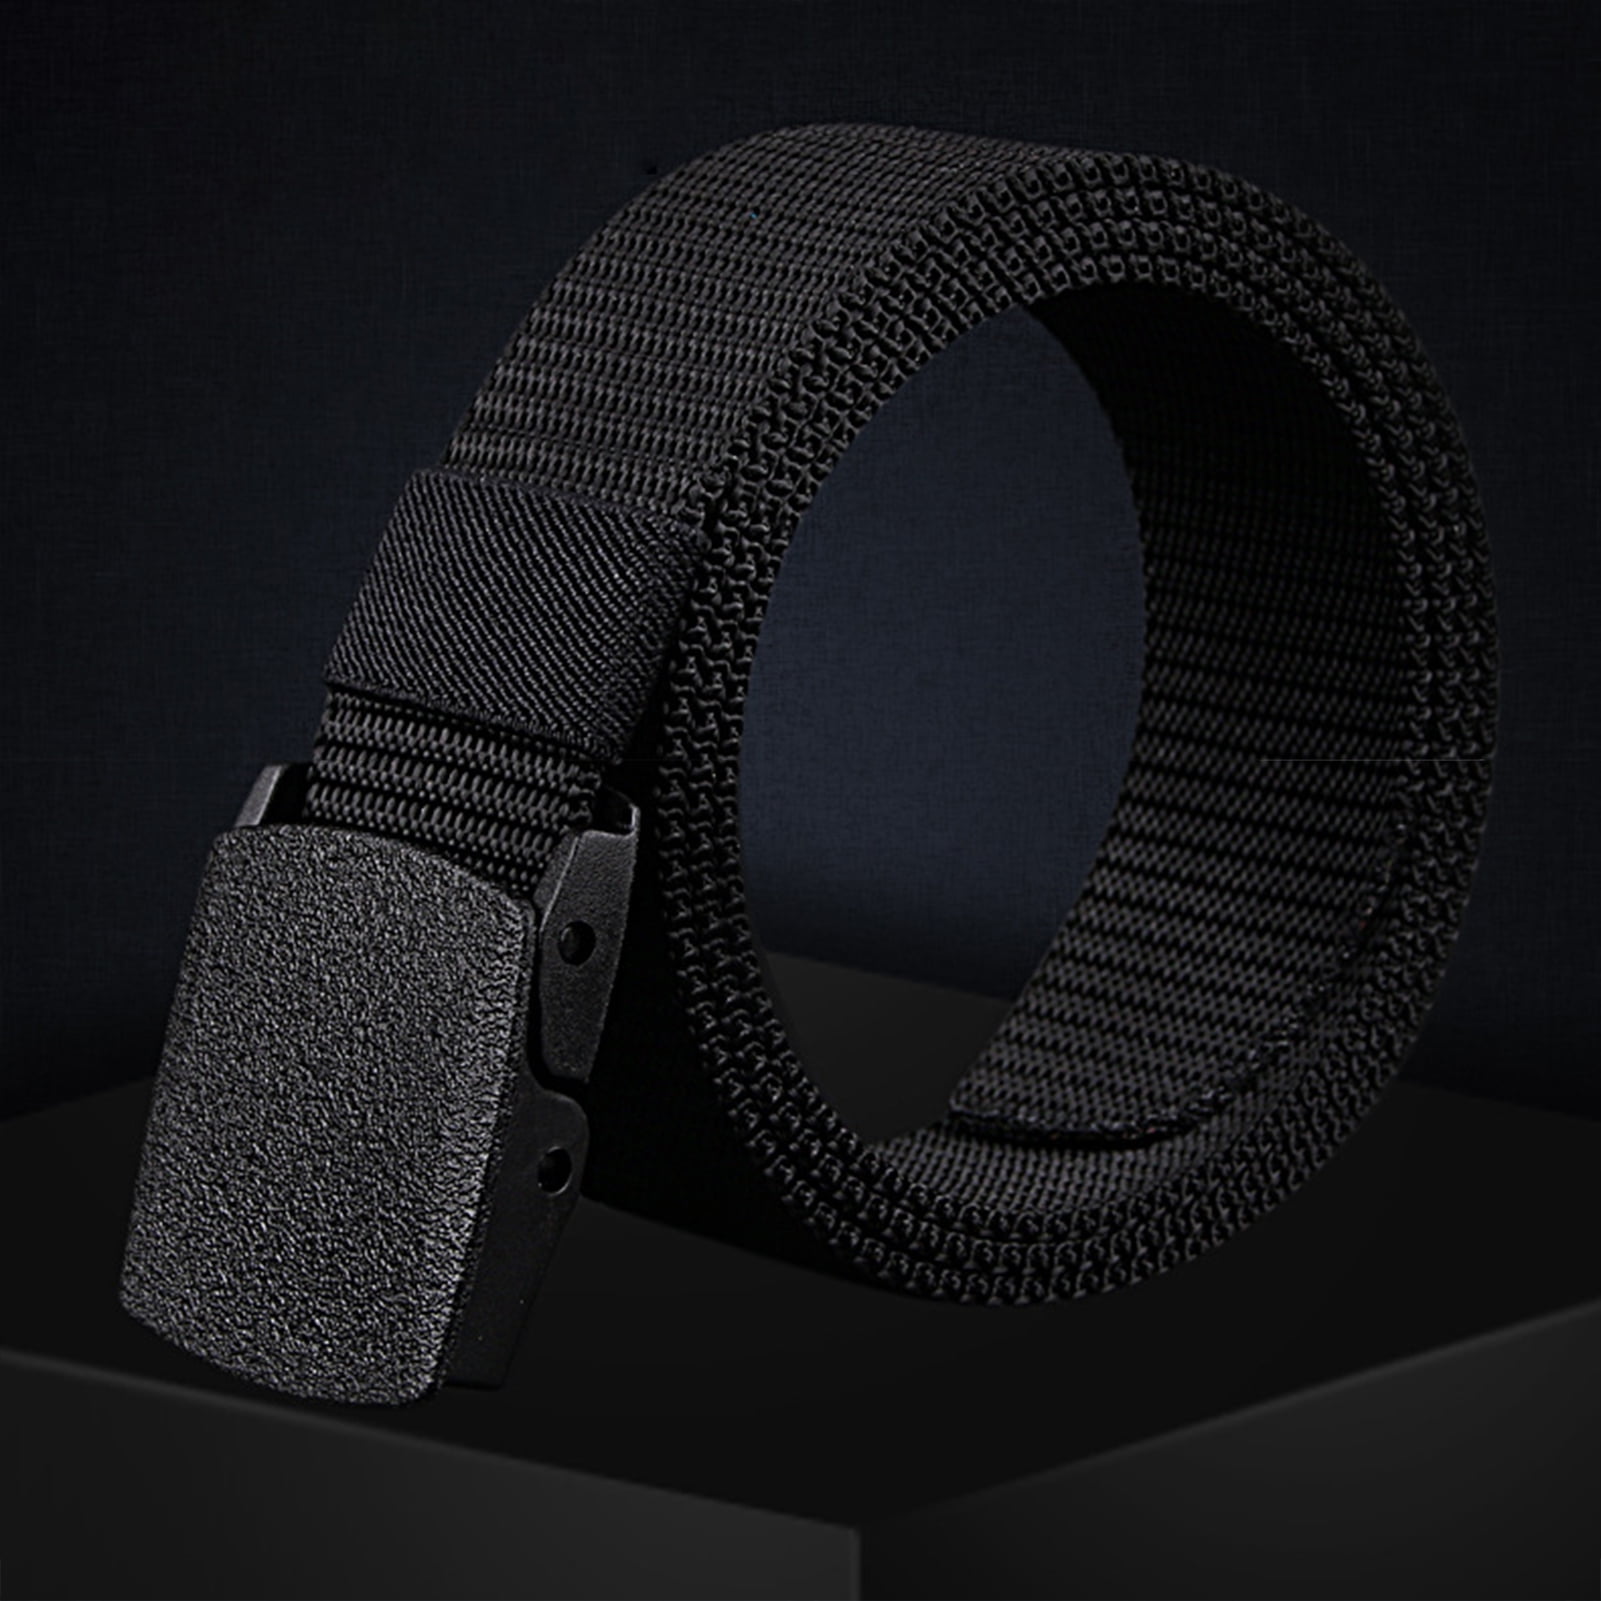 Men's Military Adjustable Nylon Belt with Plastic Buckle - XG-TB2